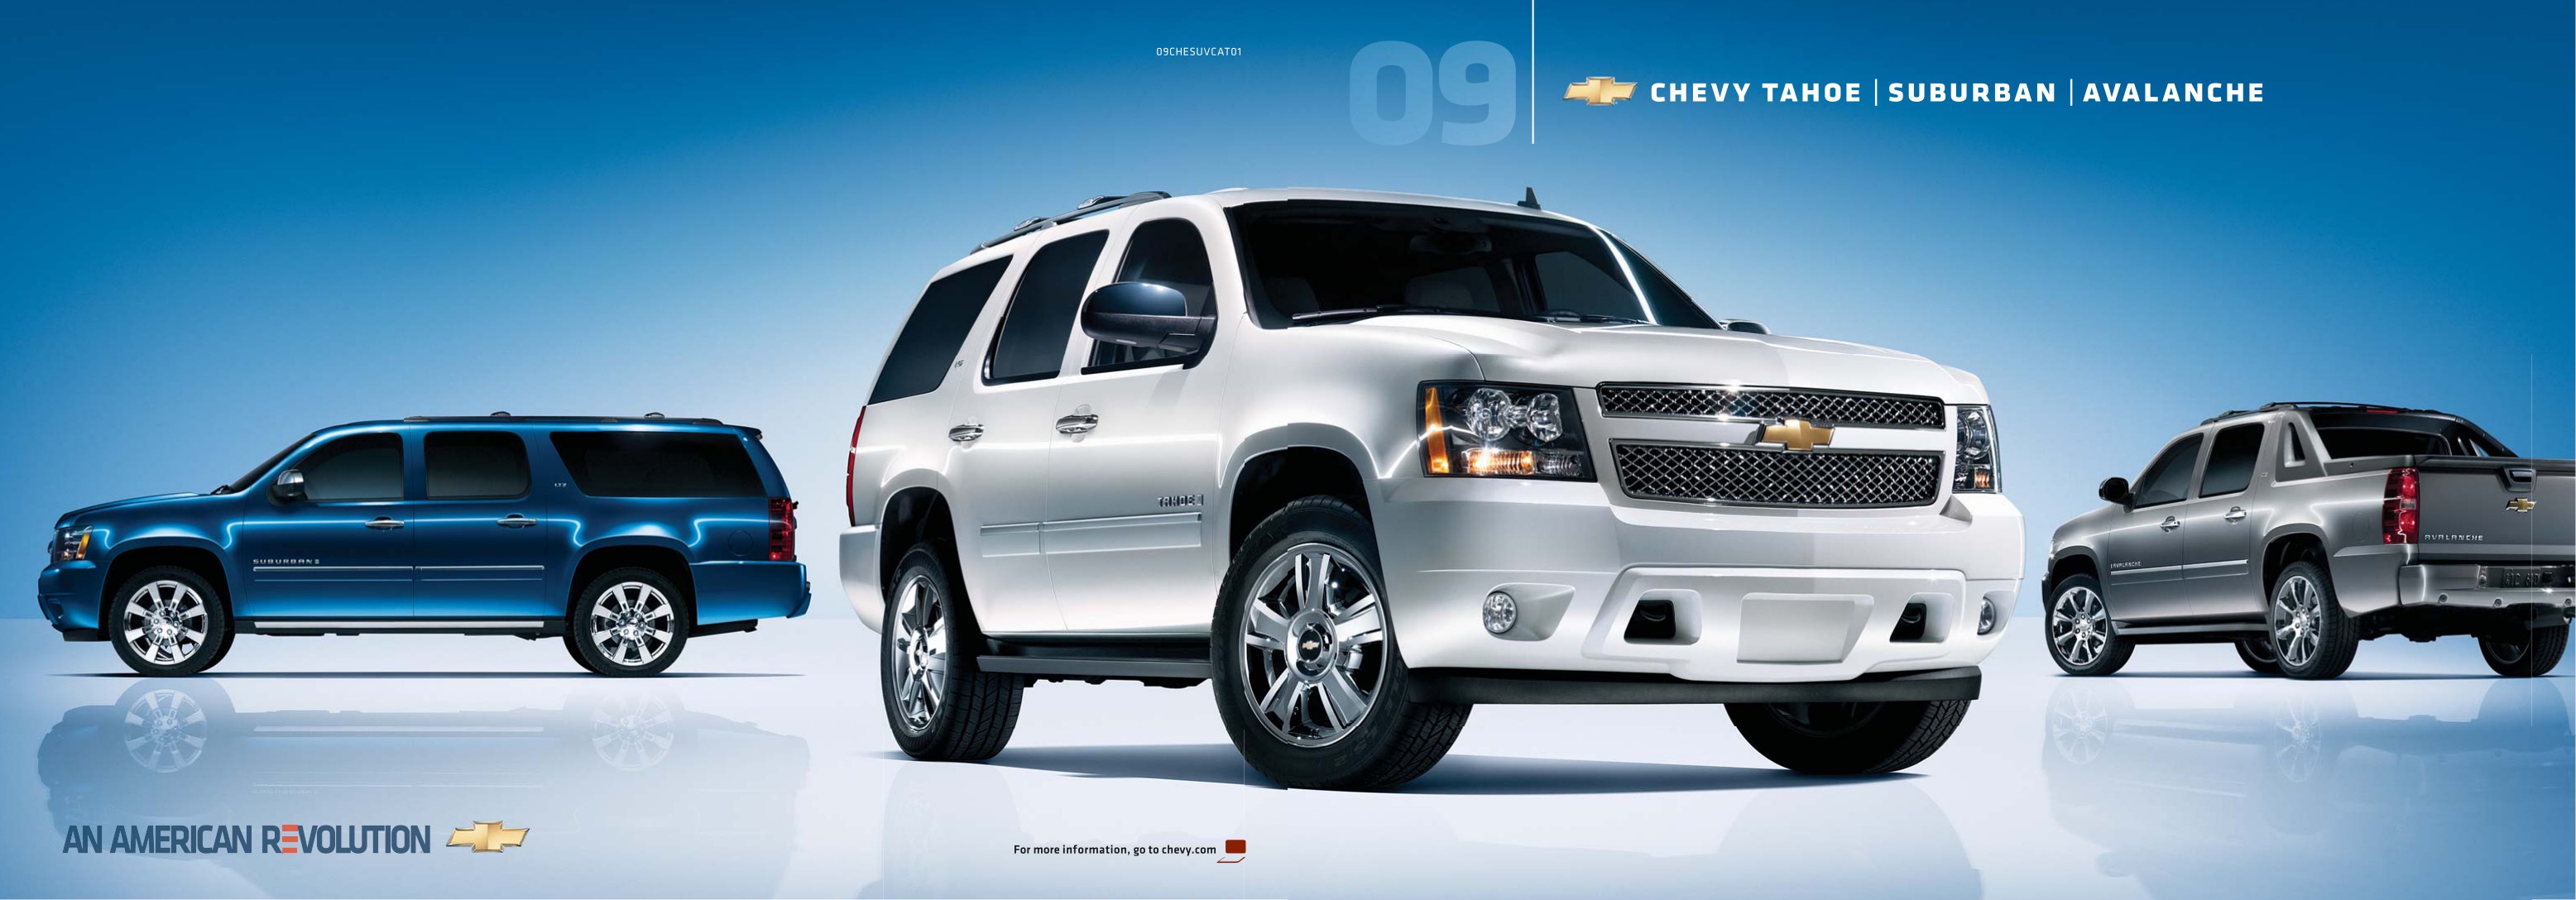 2009 Chevrolet Suburban Brochure